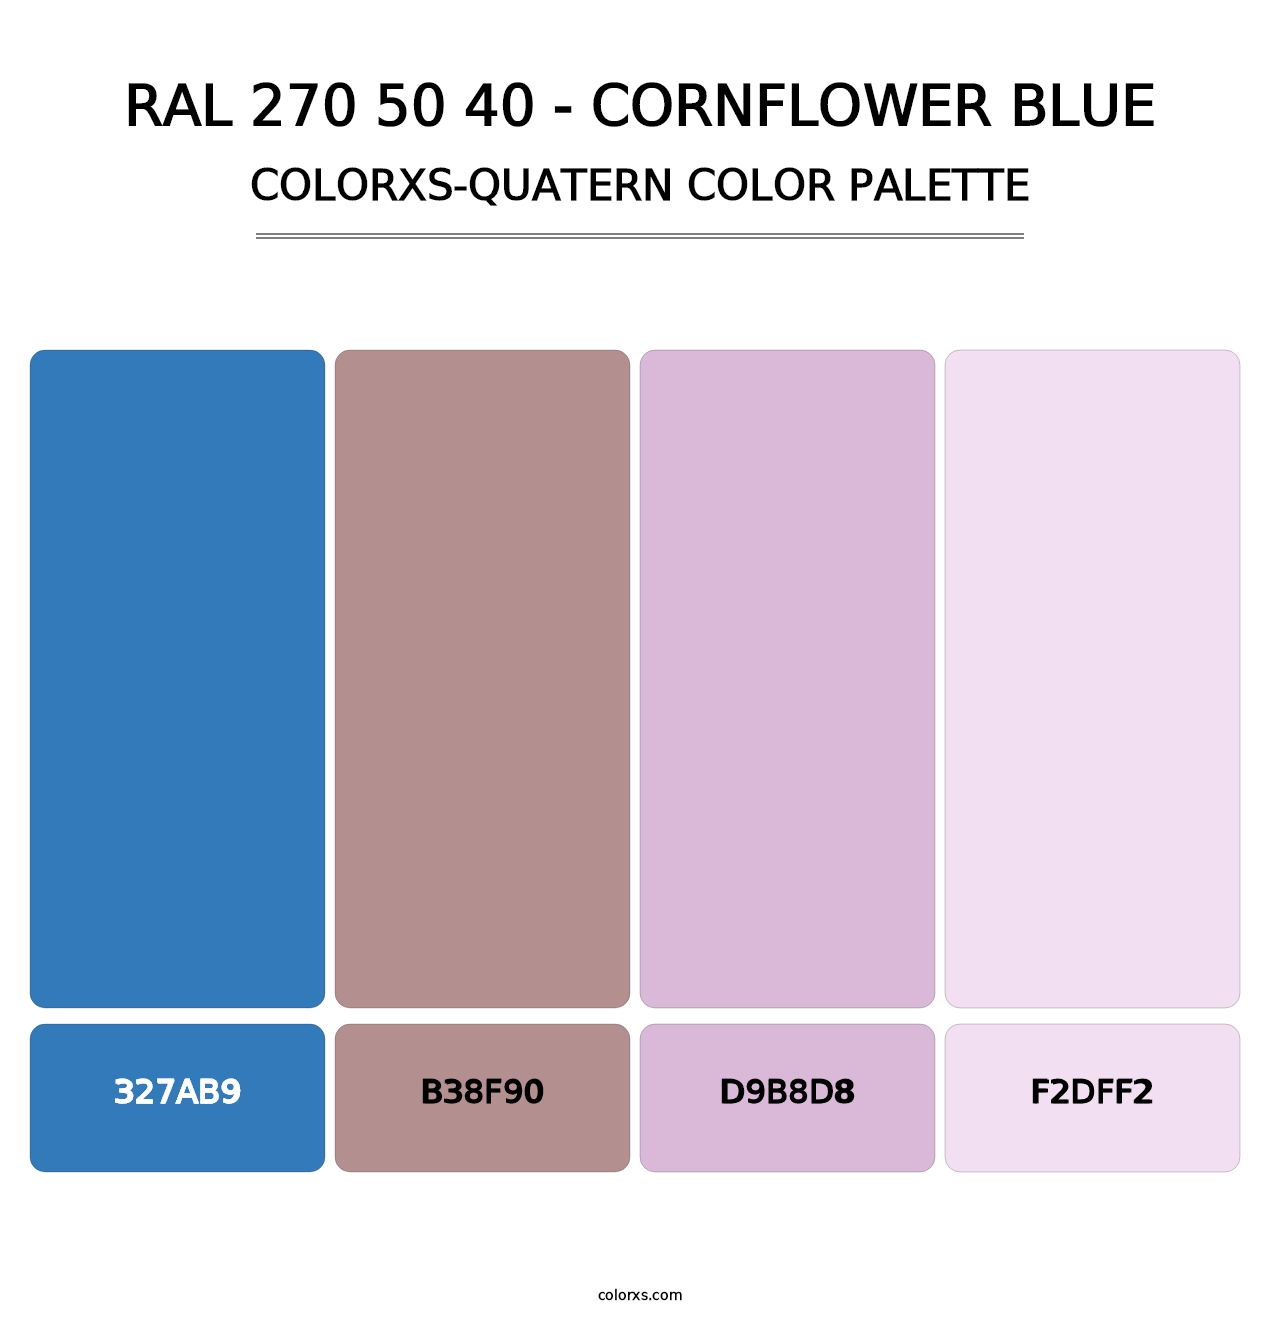 RAL 270 50 40 - Cornflower Blue - Colorxs Quatern Palette